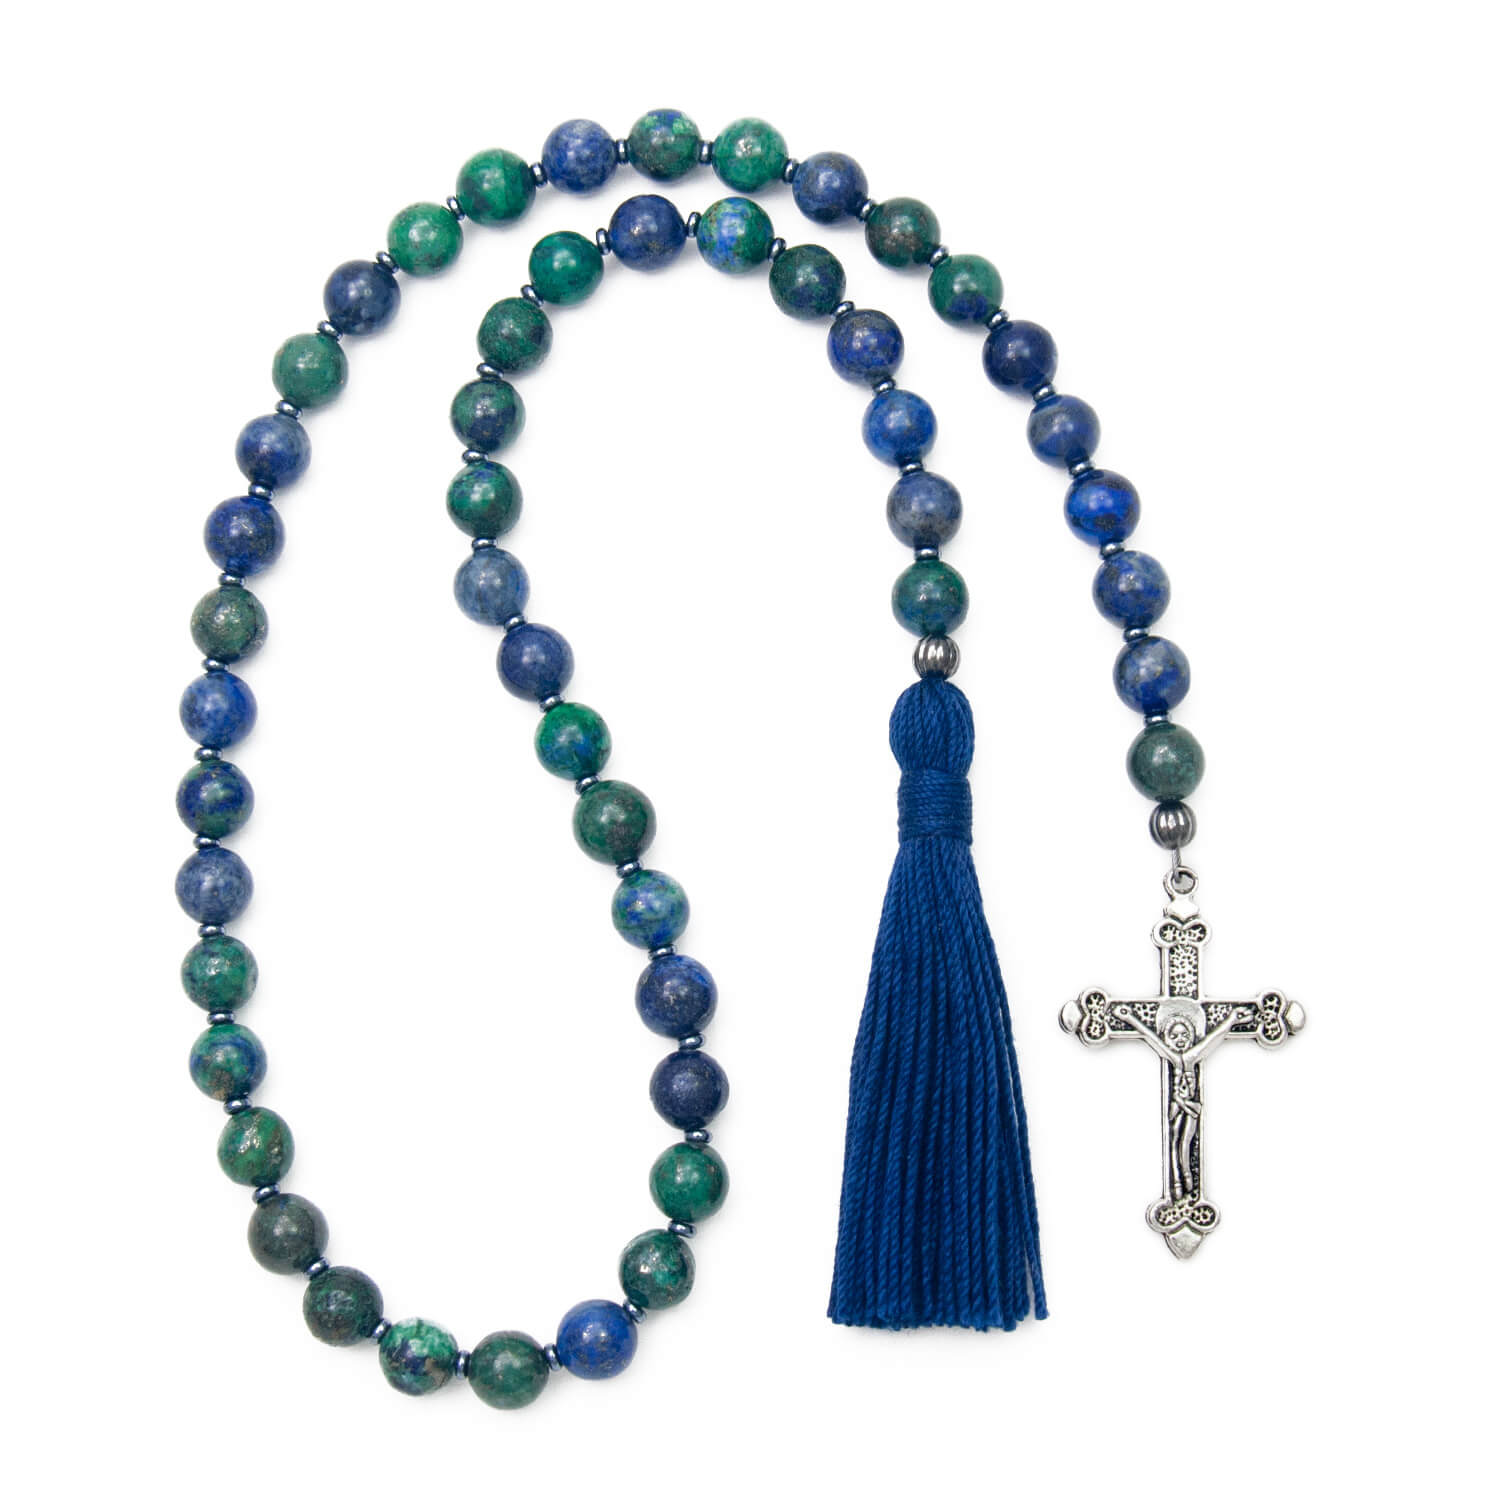 Paternoster Lord's Prayer Beads - Azurite